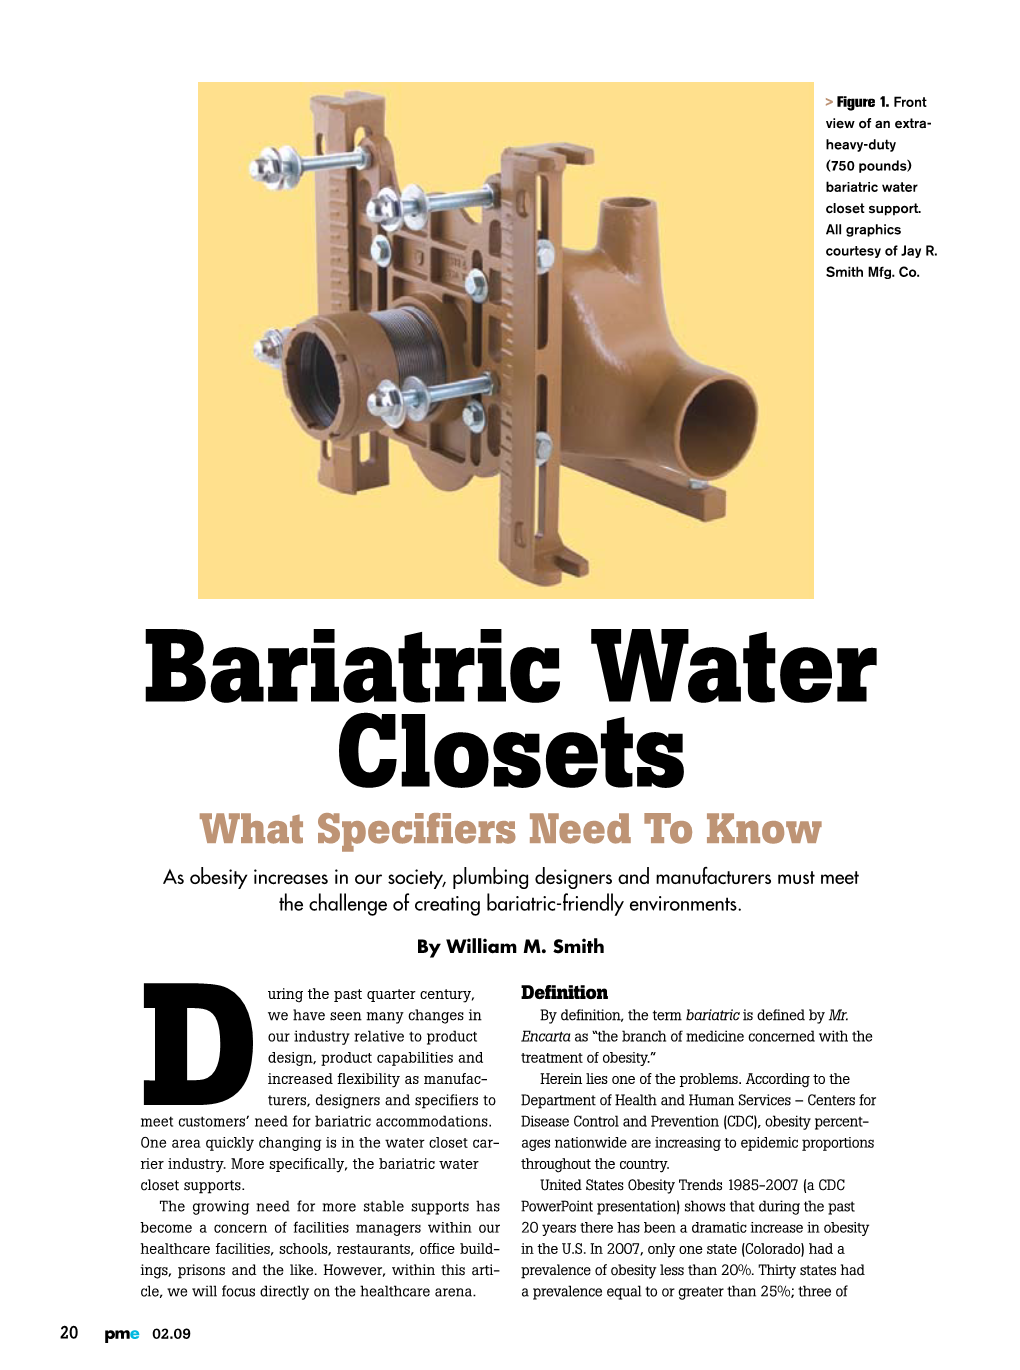 Bariatric Water Closets